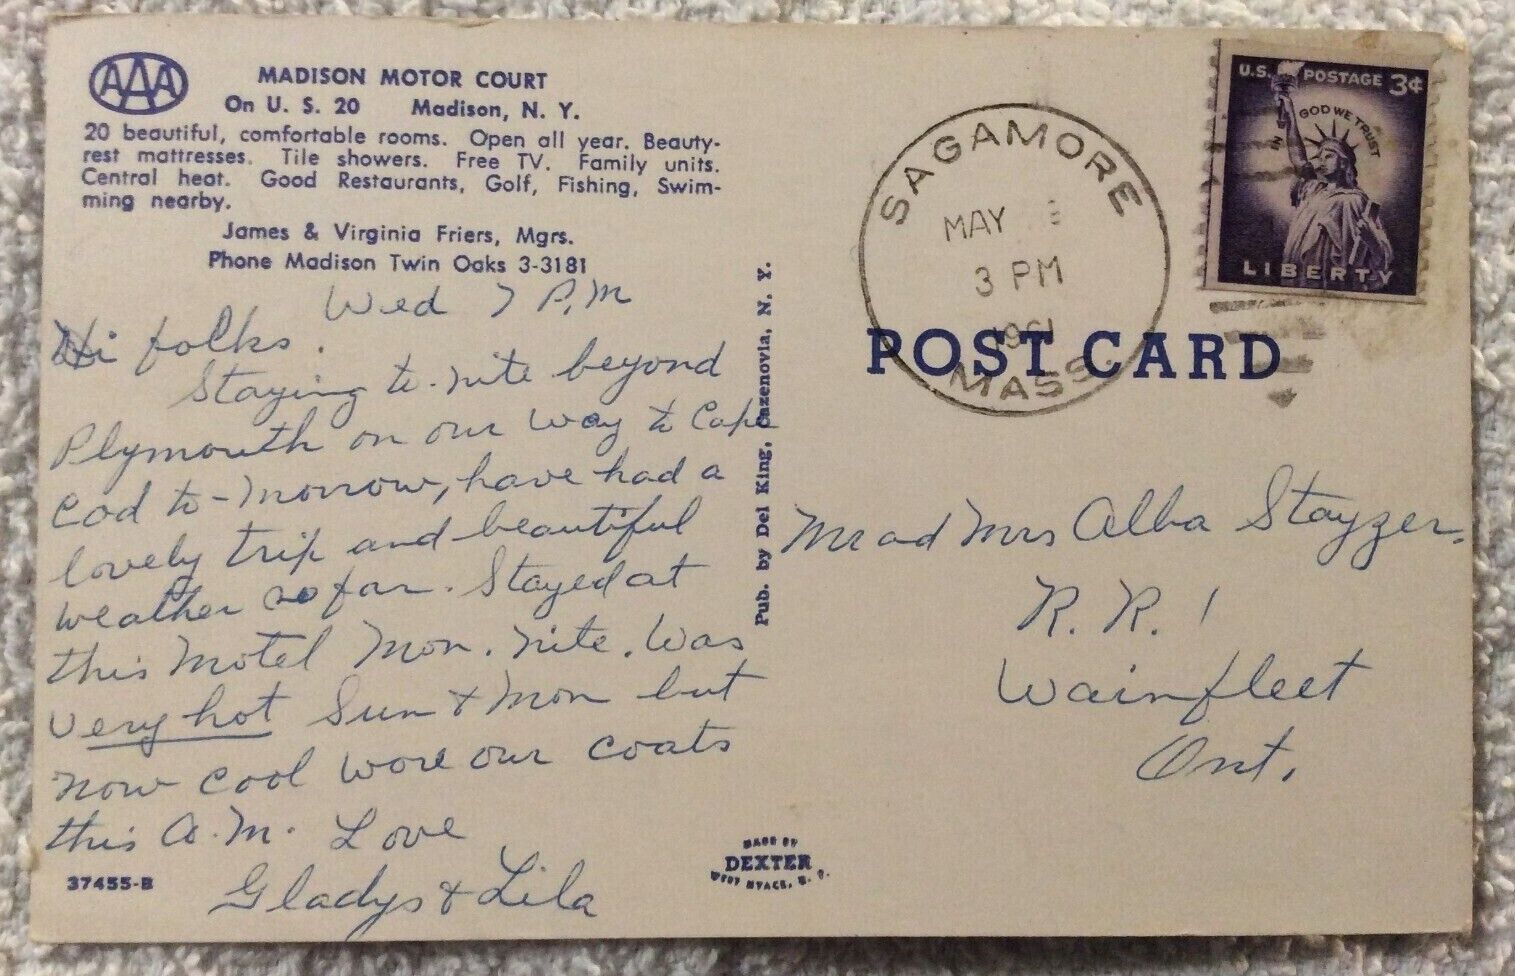 Maison Motor Court - Madison, New York - Vintage Postcard 